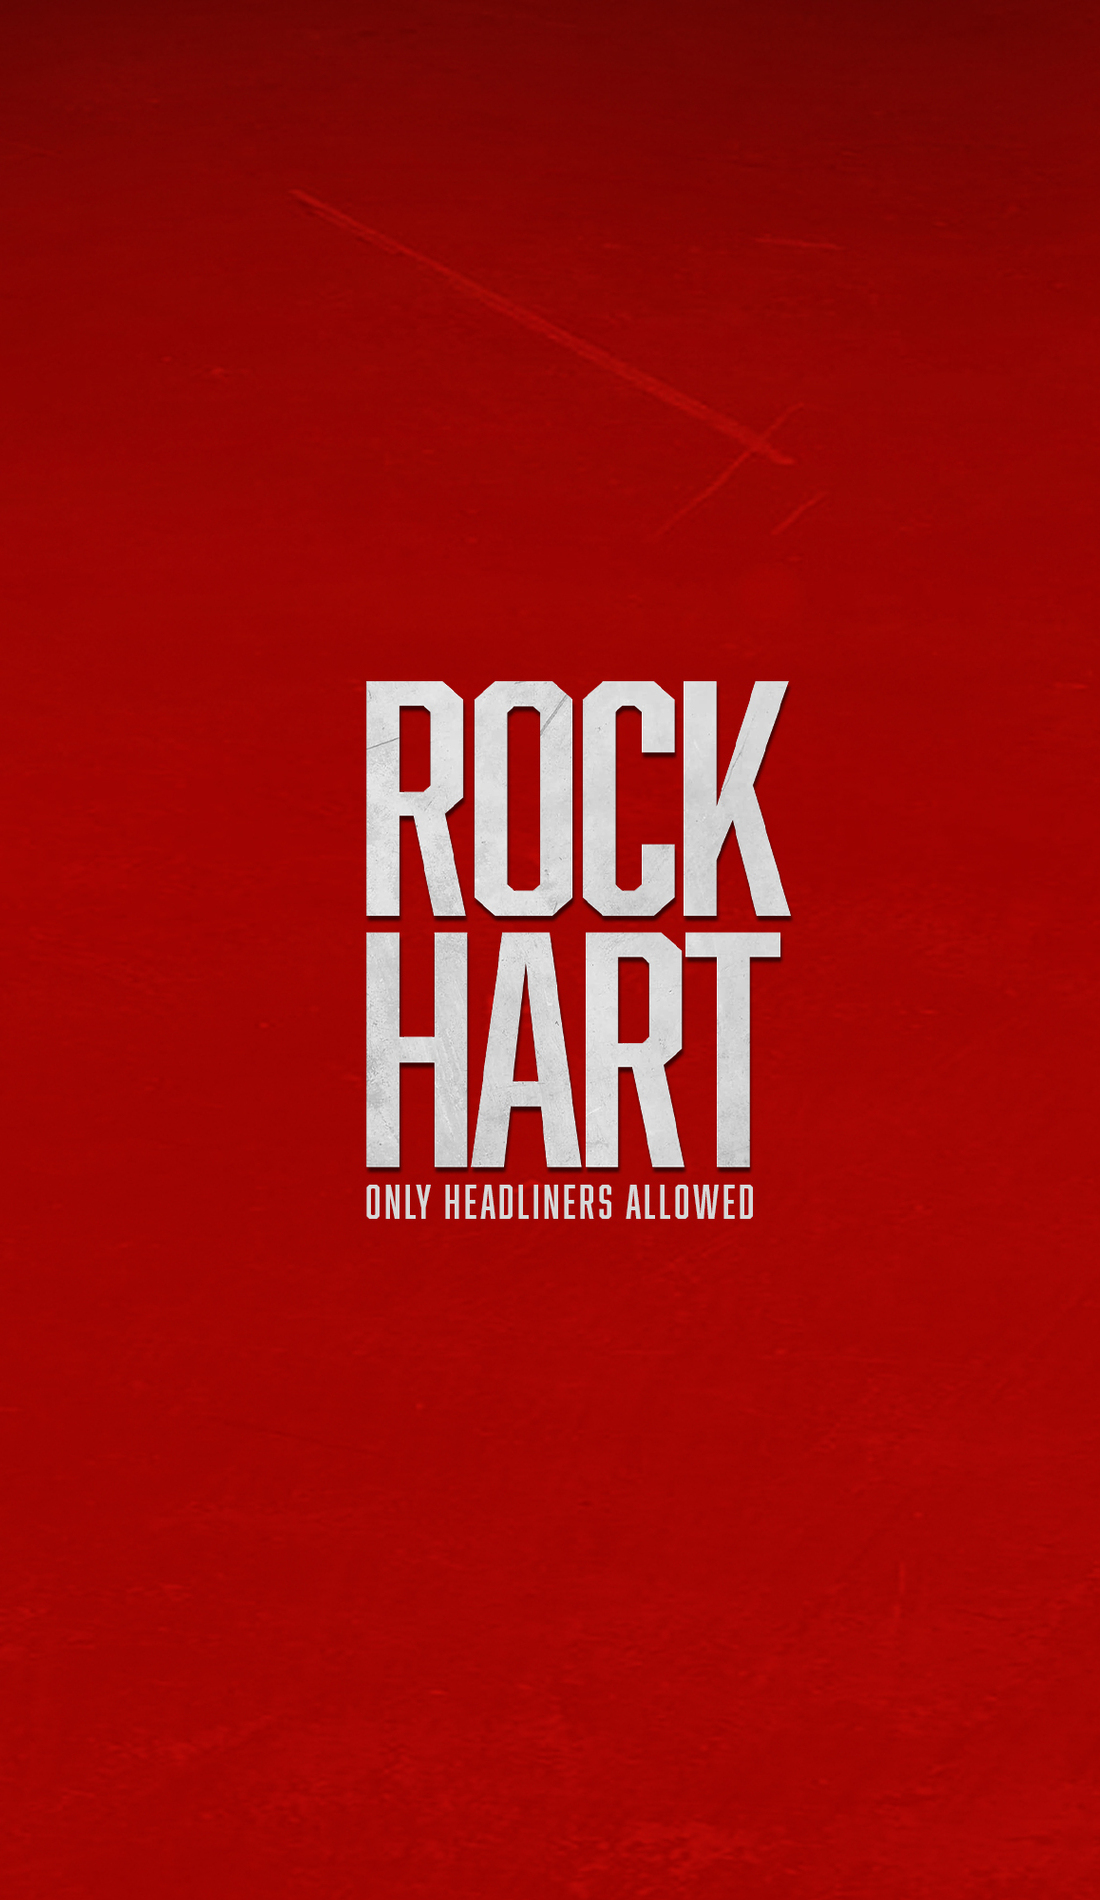 A Rock Hart live event